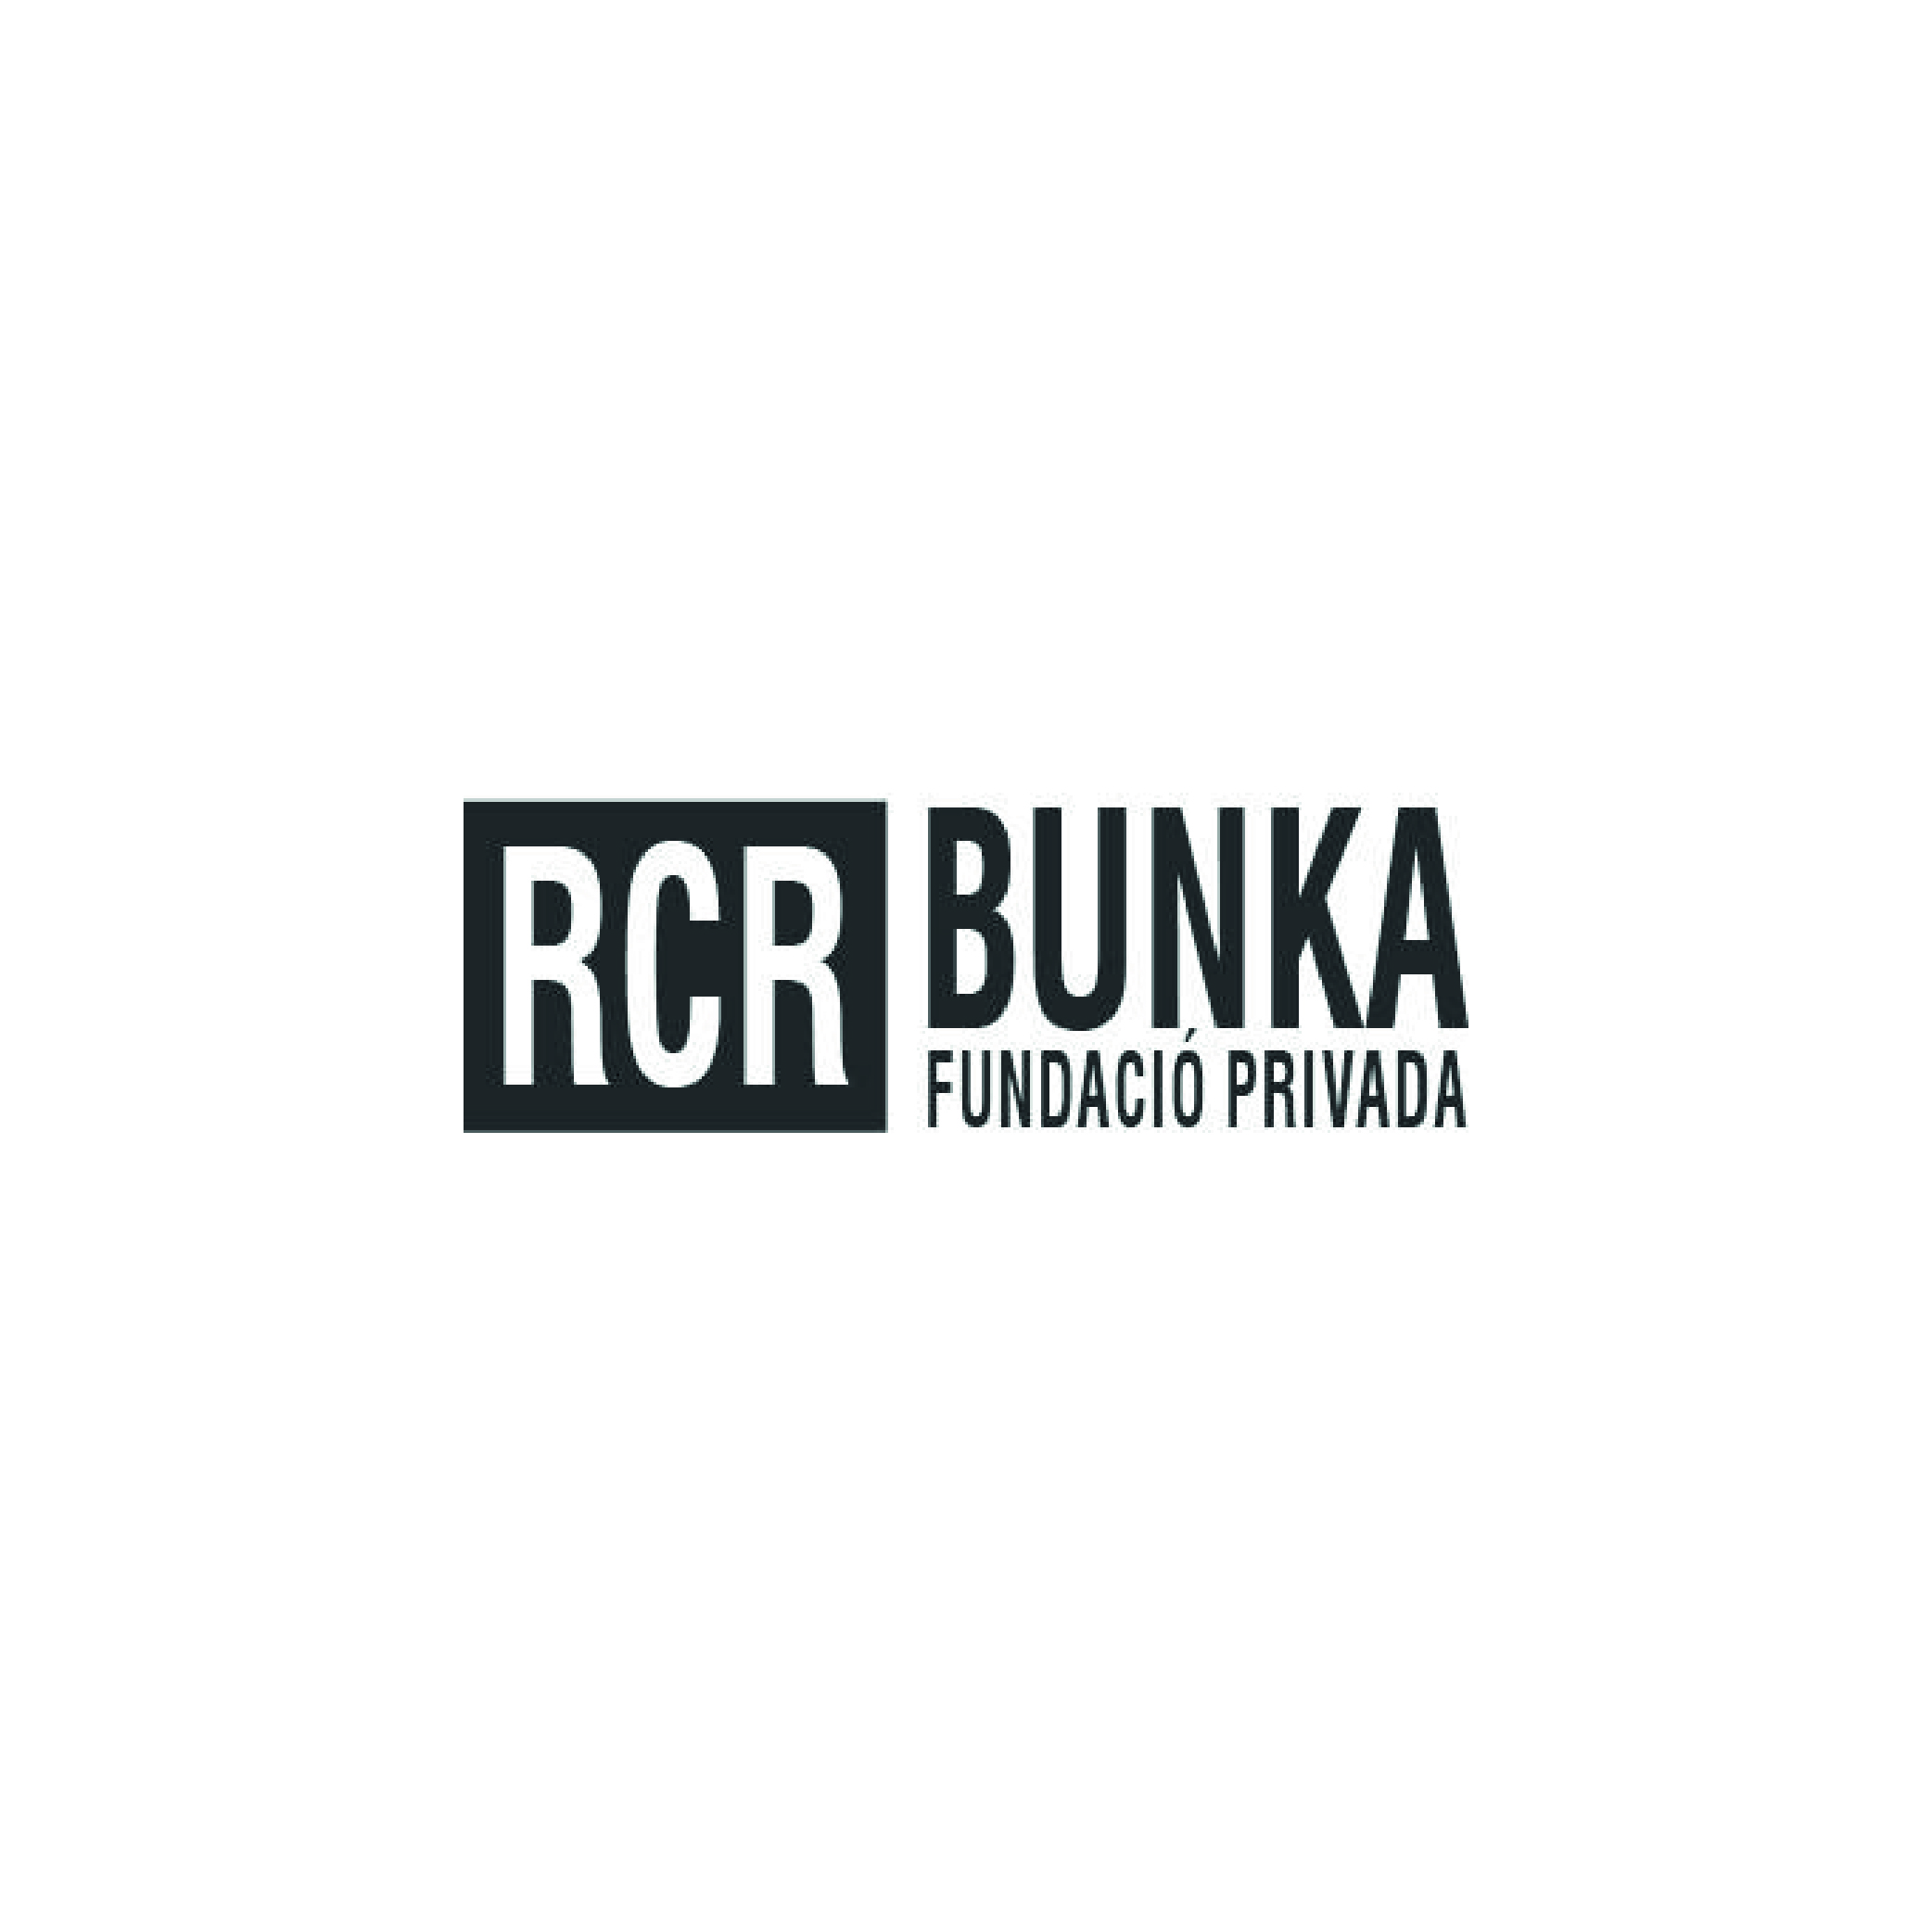 RCR Bunka